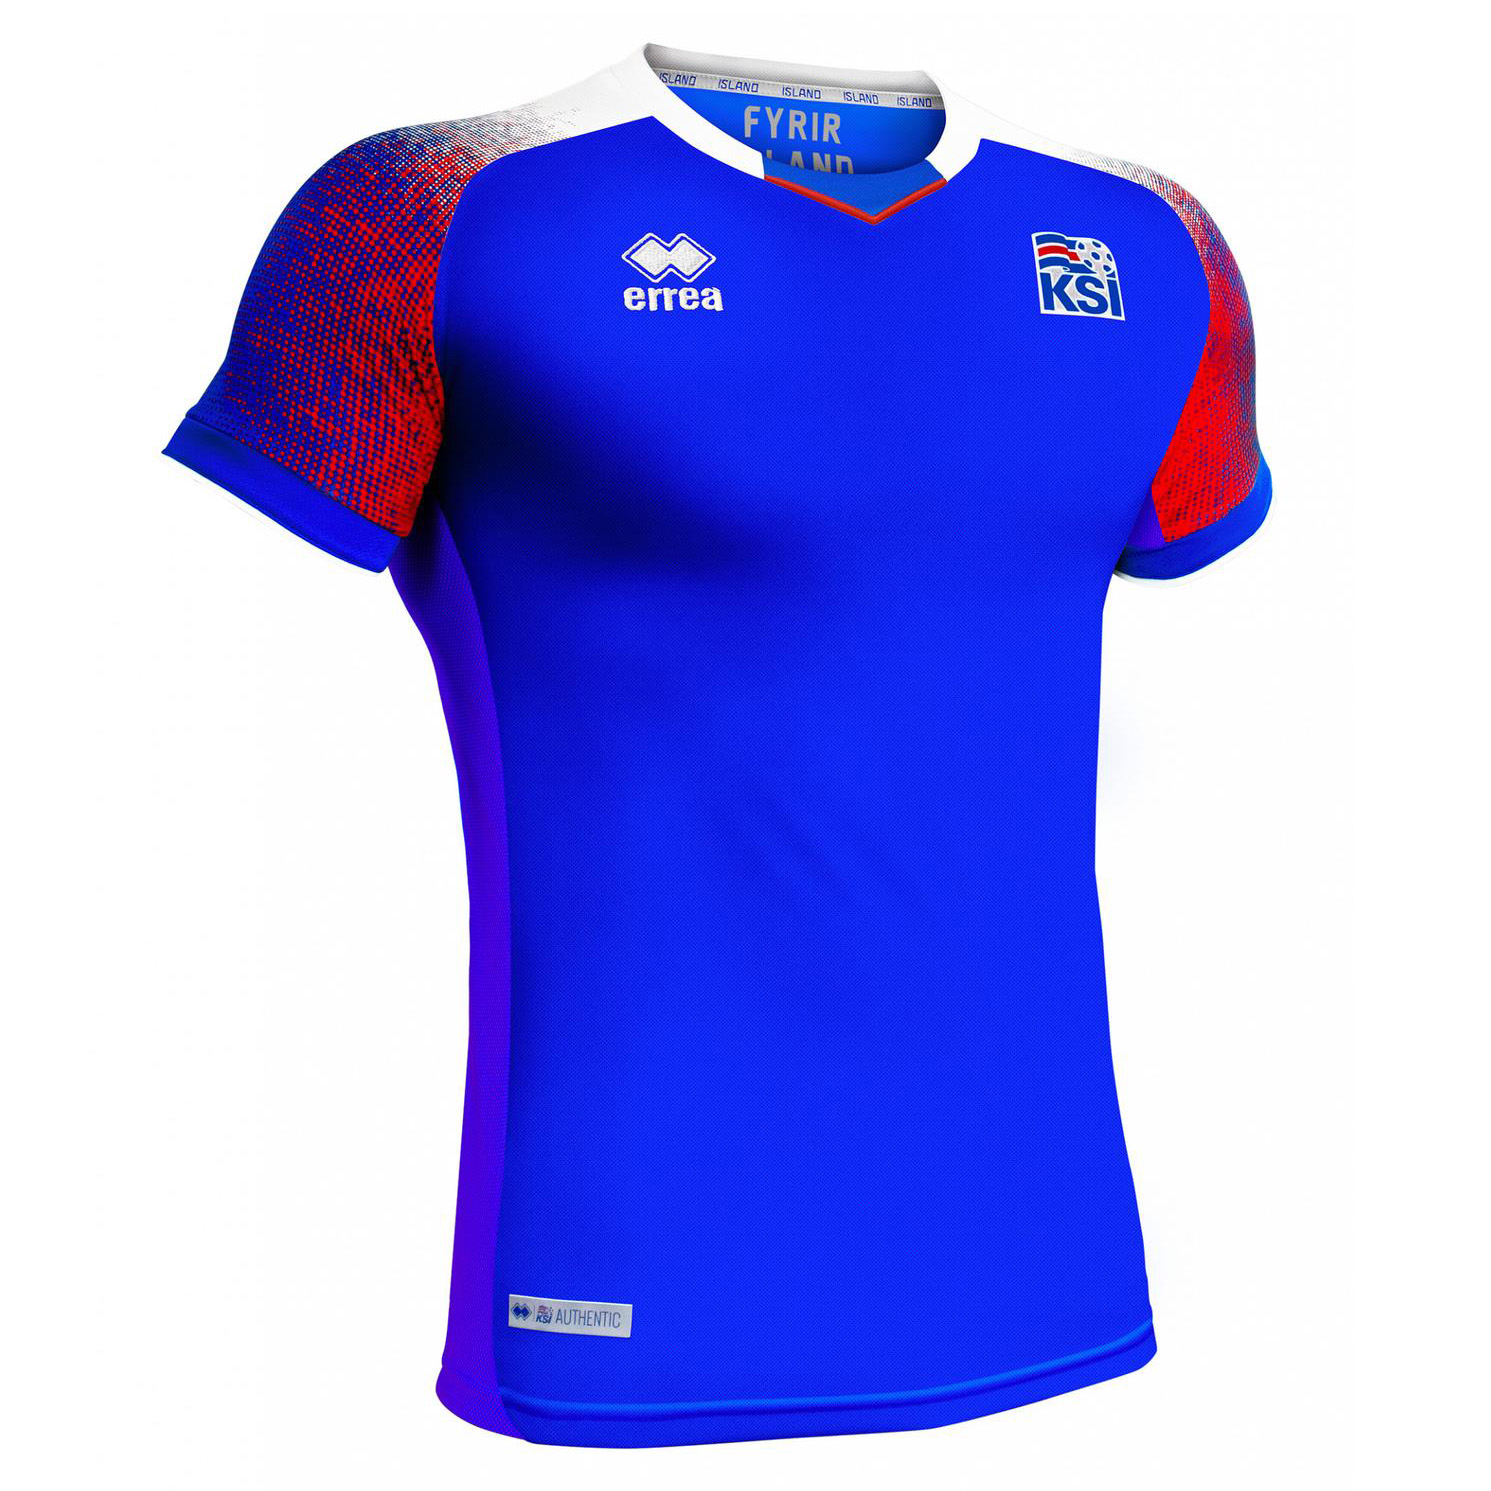 Iceland Sport Gear,Iceland Soccer Uniforms,Iceland Soccer Jerseys